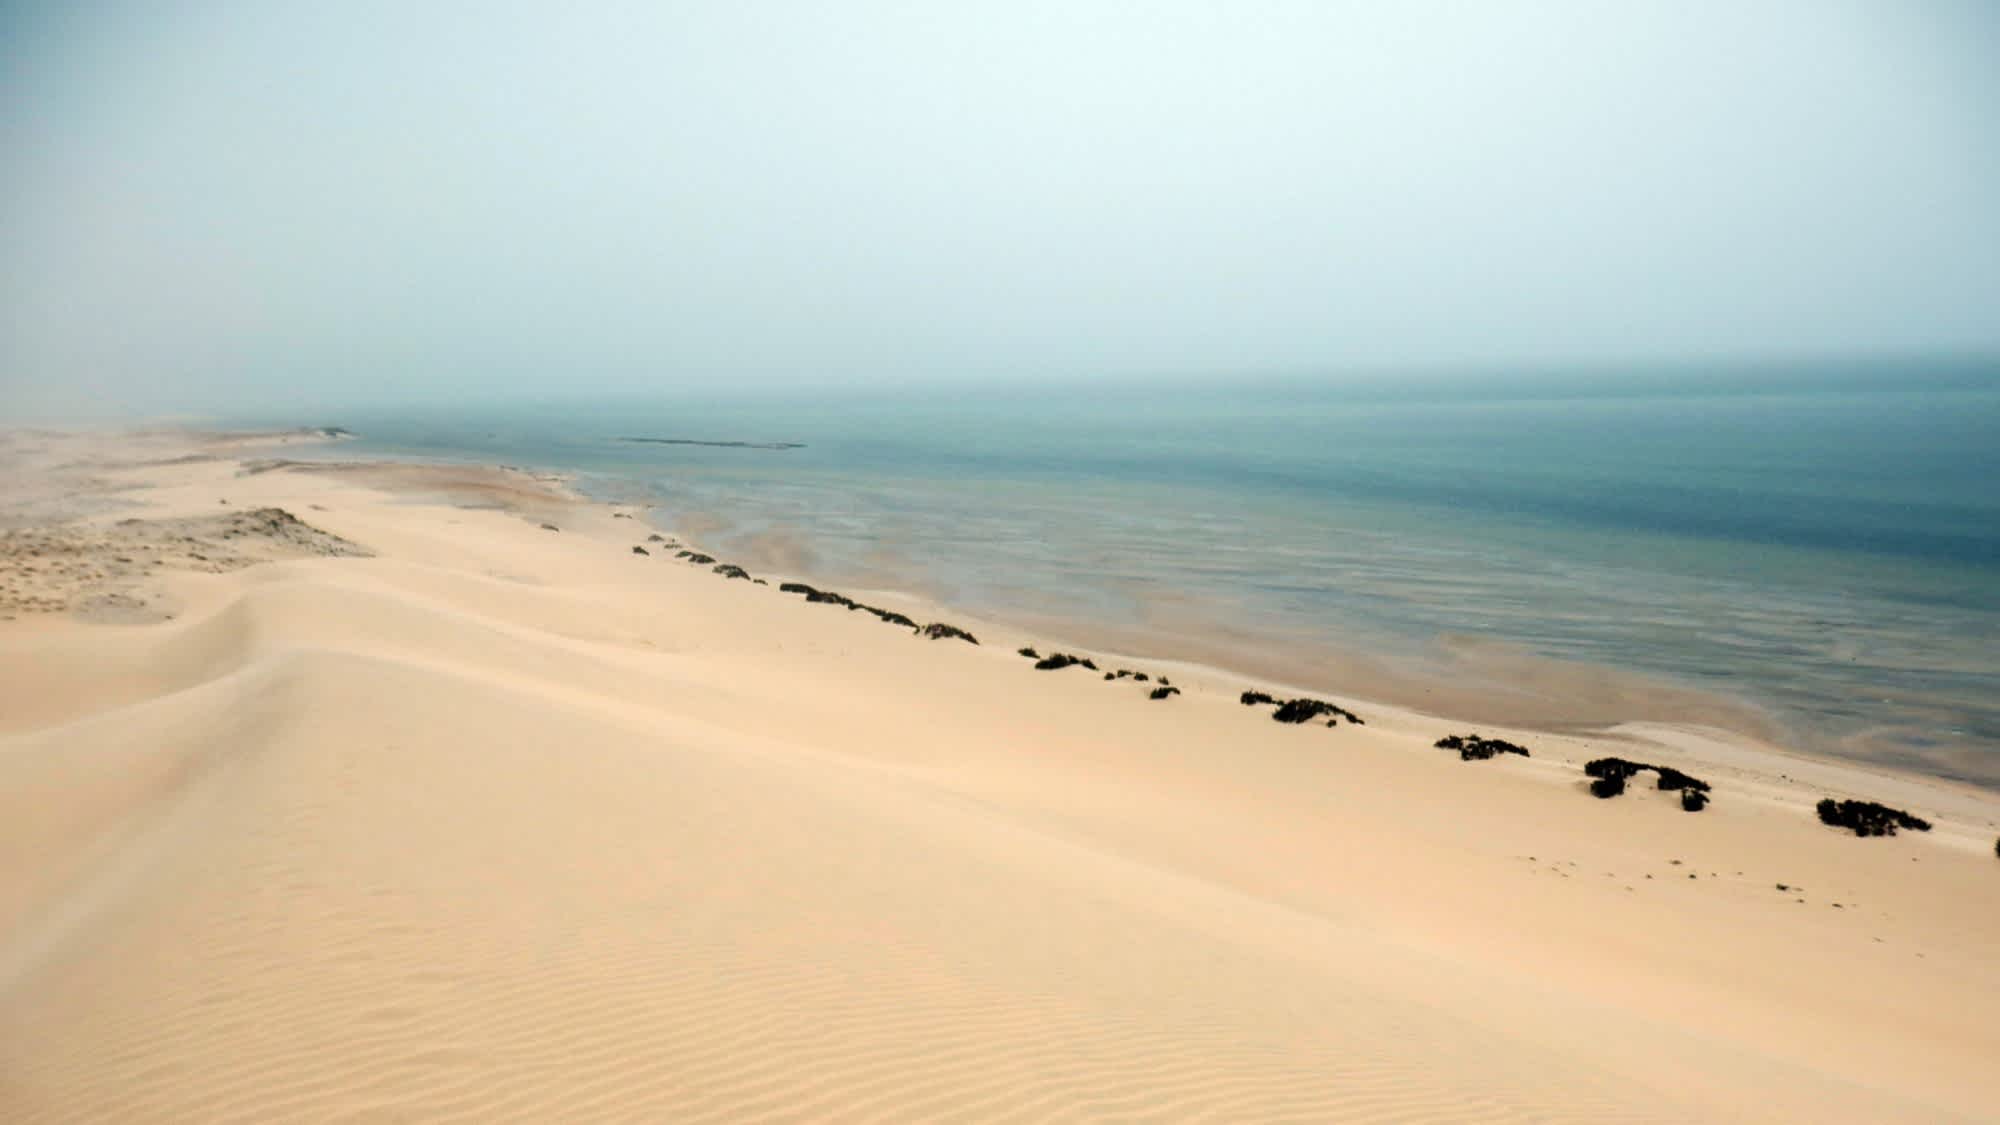 Sanddünen bei Dakhla in der Westsahara, Morocco

